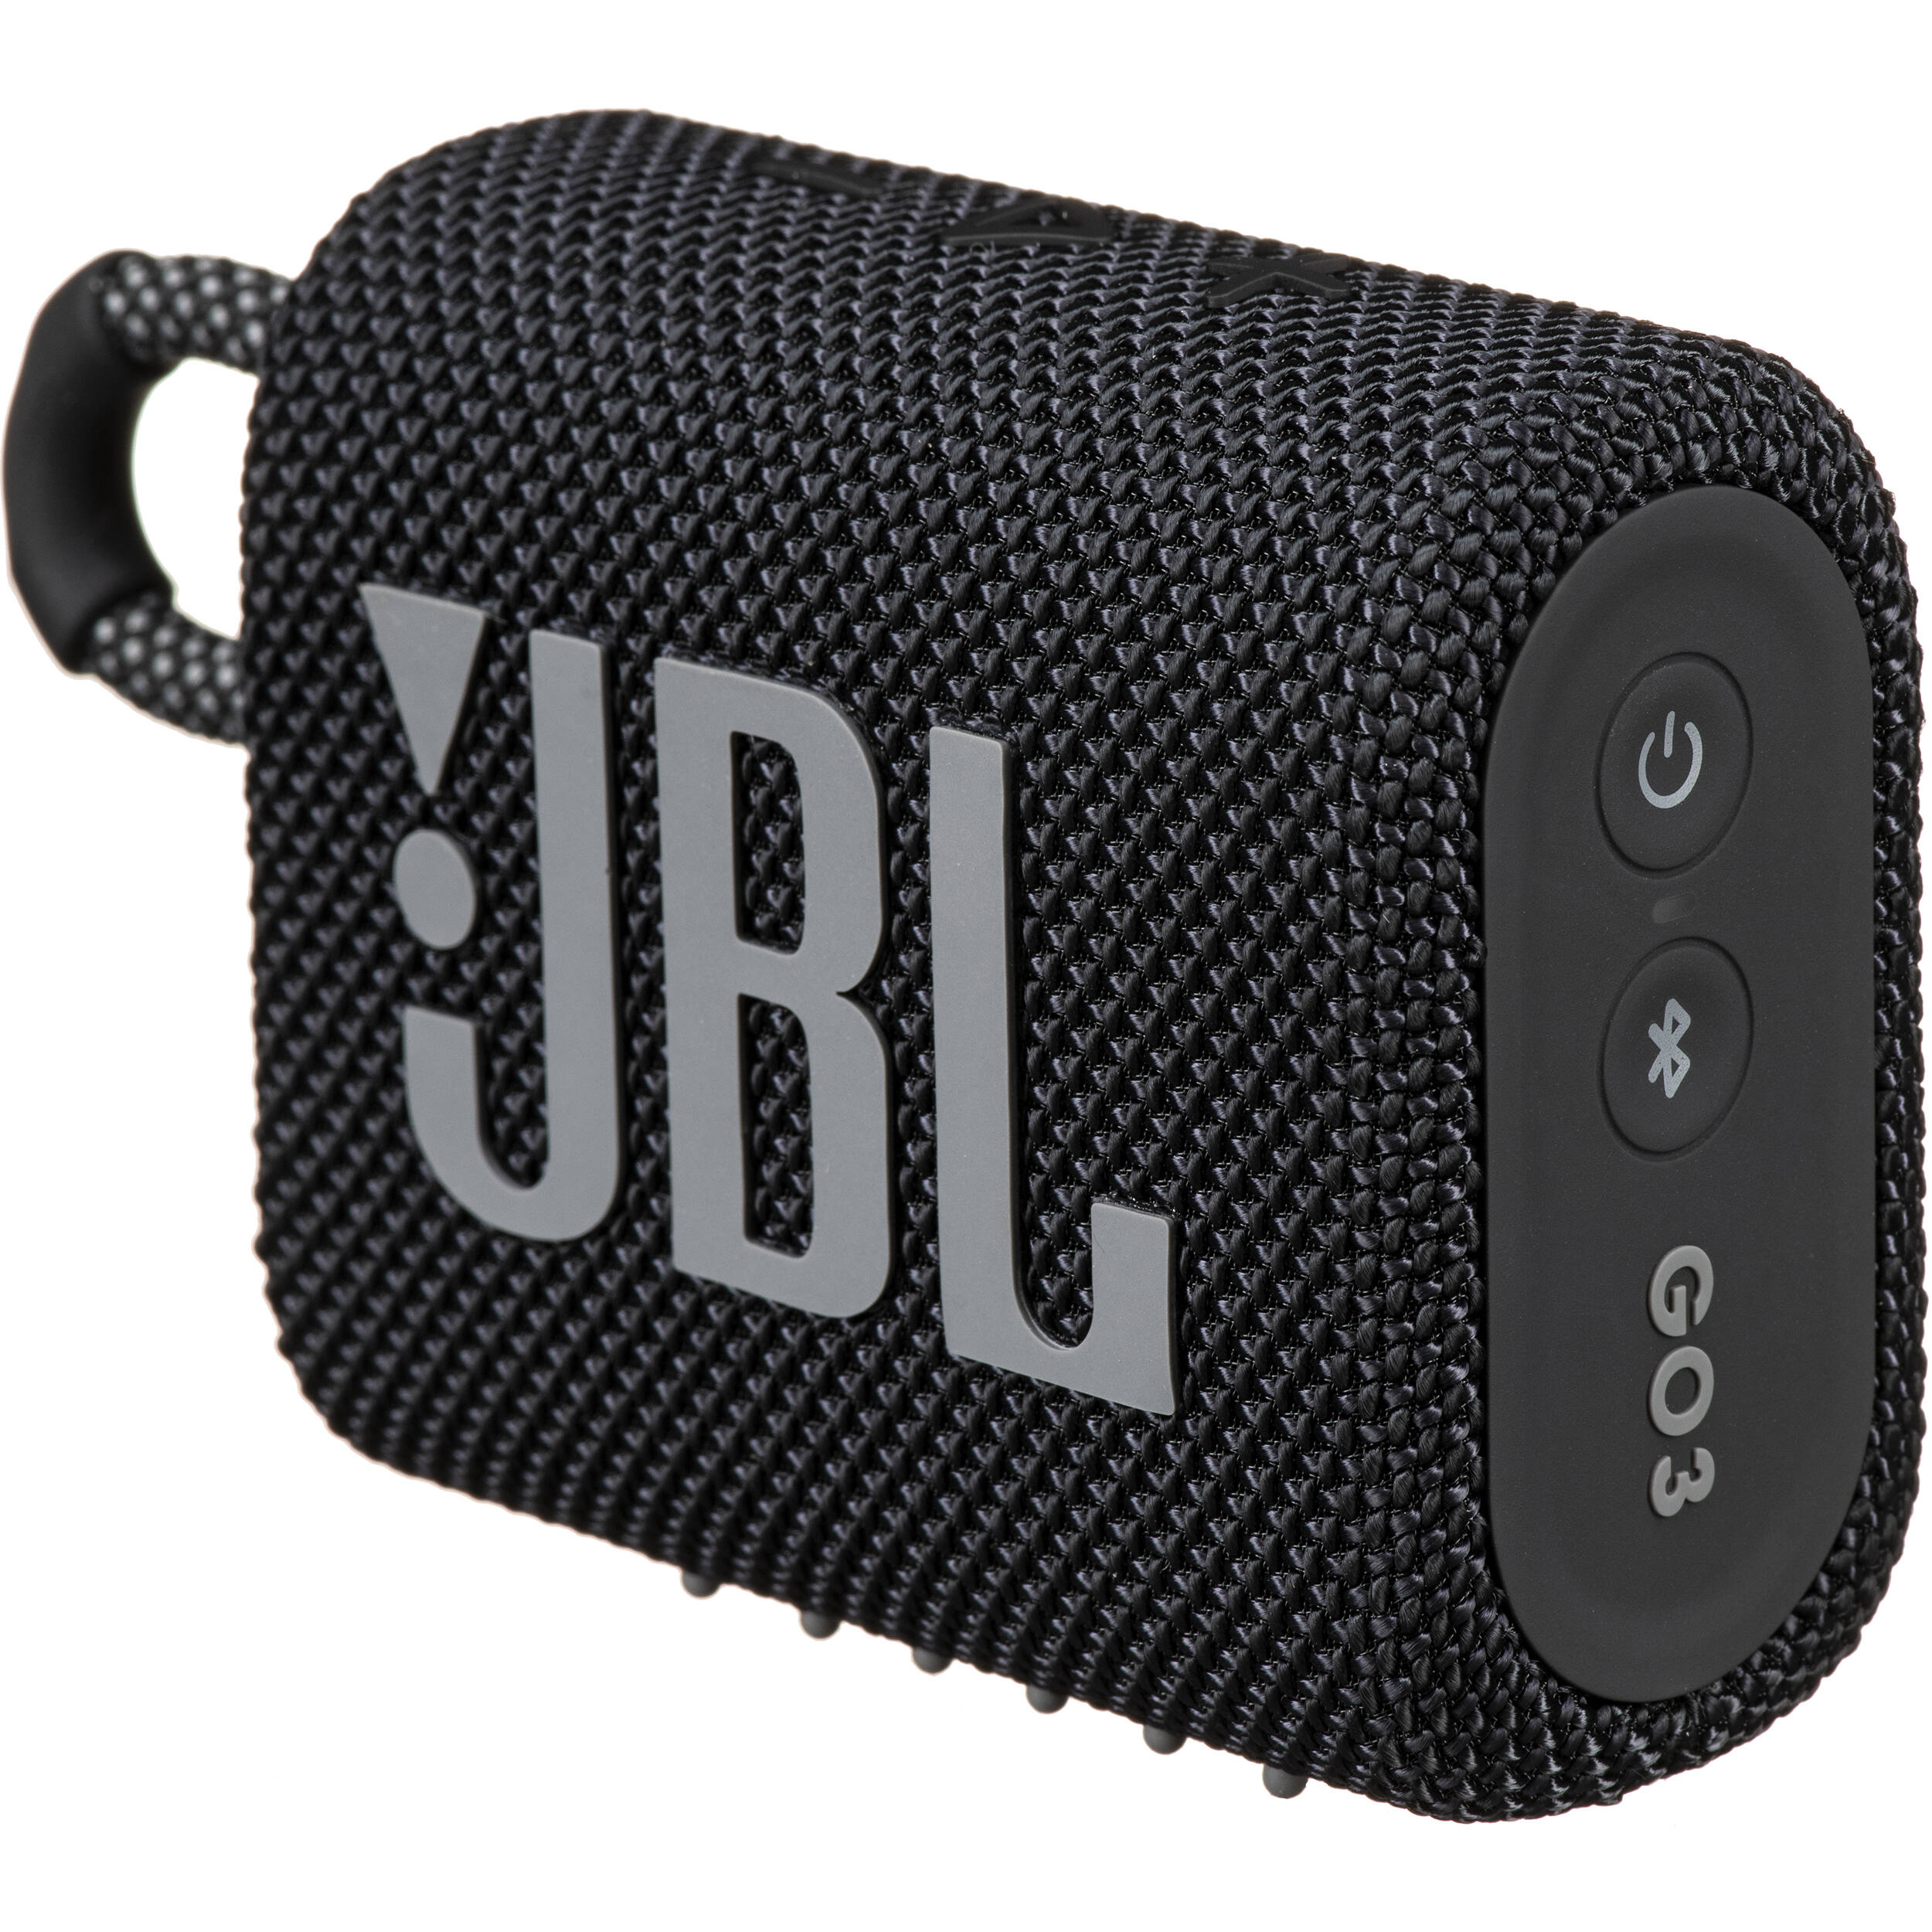 Jbl on the go купить. Bluetooth JBL go. Колонка JBL go Black. Портативная акустика JBL go 3 черный. Колонка JBL go 3 серая.